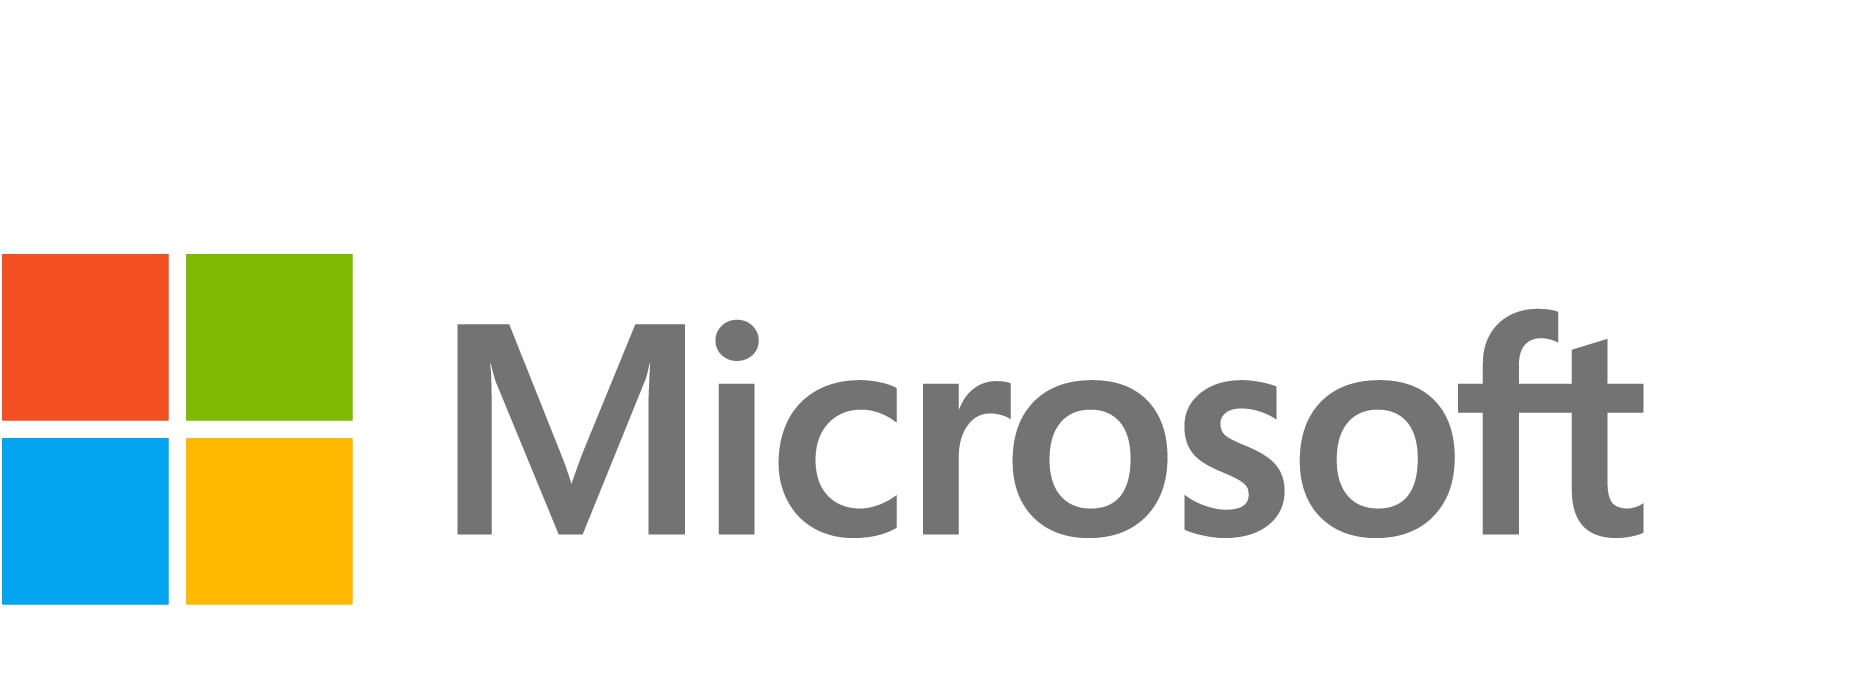 Microsoft Project Professional - software assurance - 1 PC